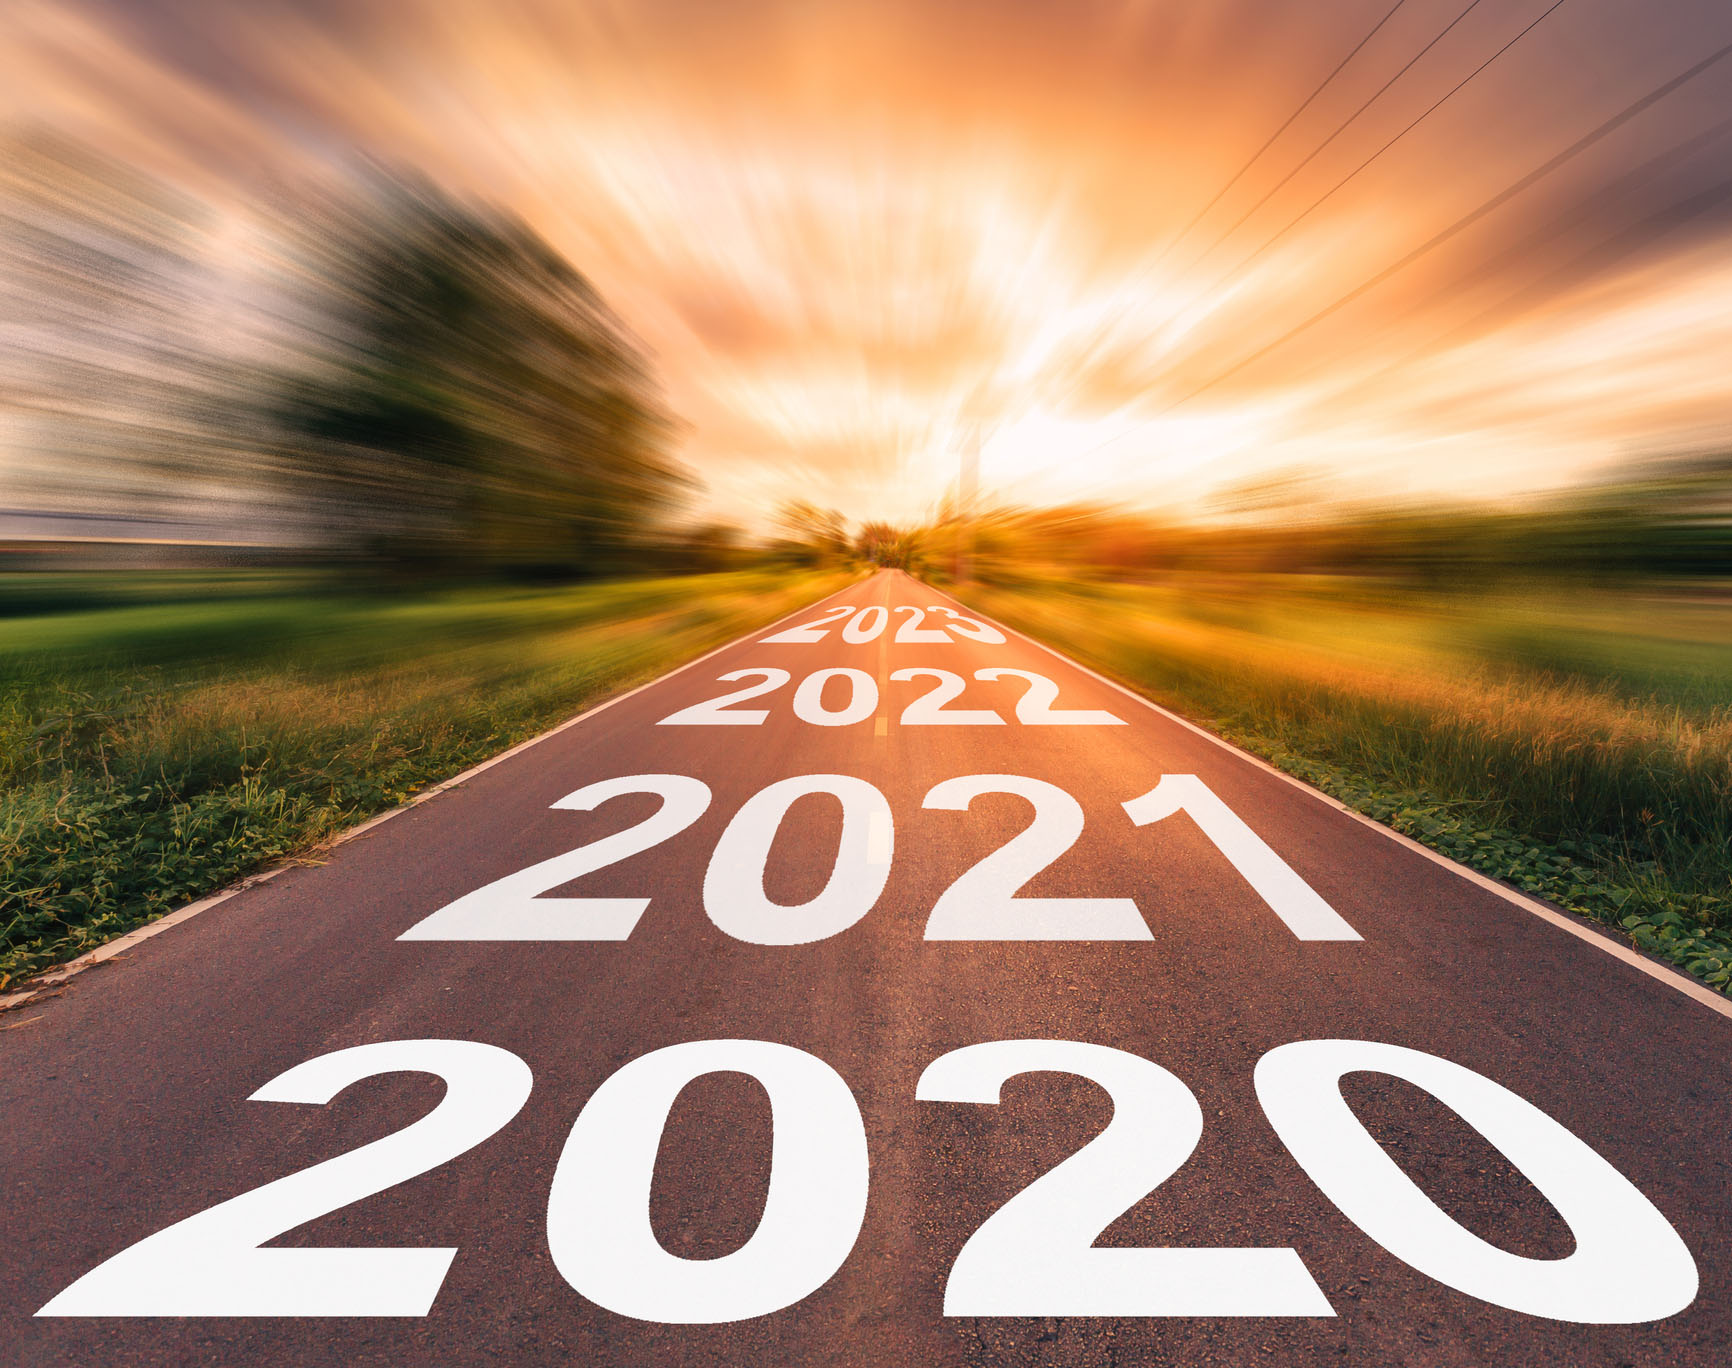 2020 год день 5. 2020 Картинка. 2028 Год картинки. Картинка 2021. Провожаем 2021 год.